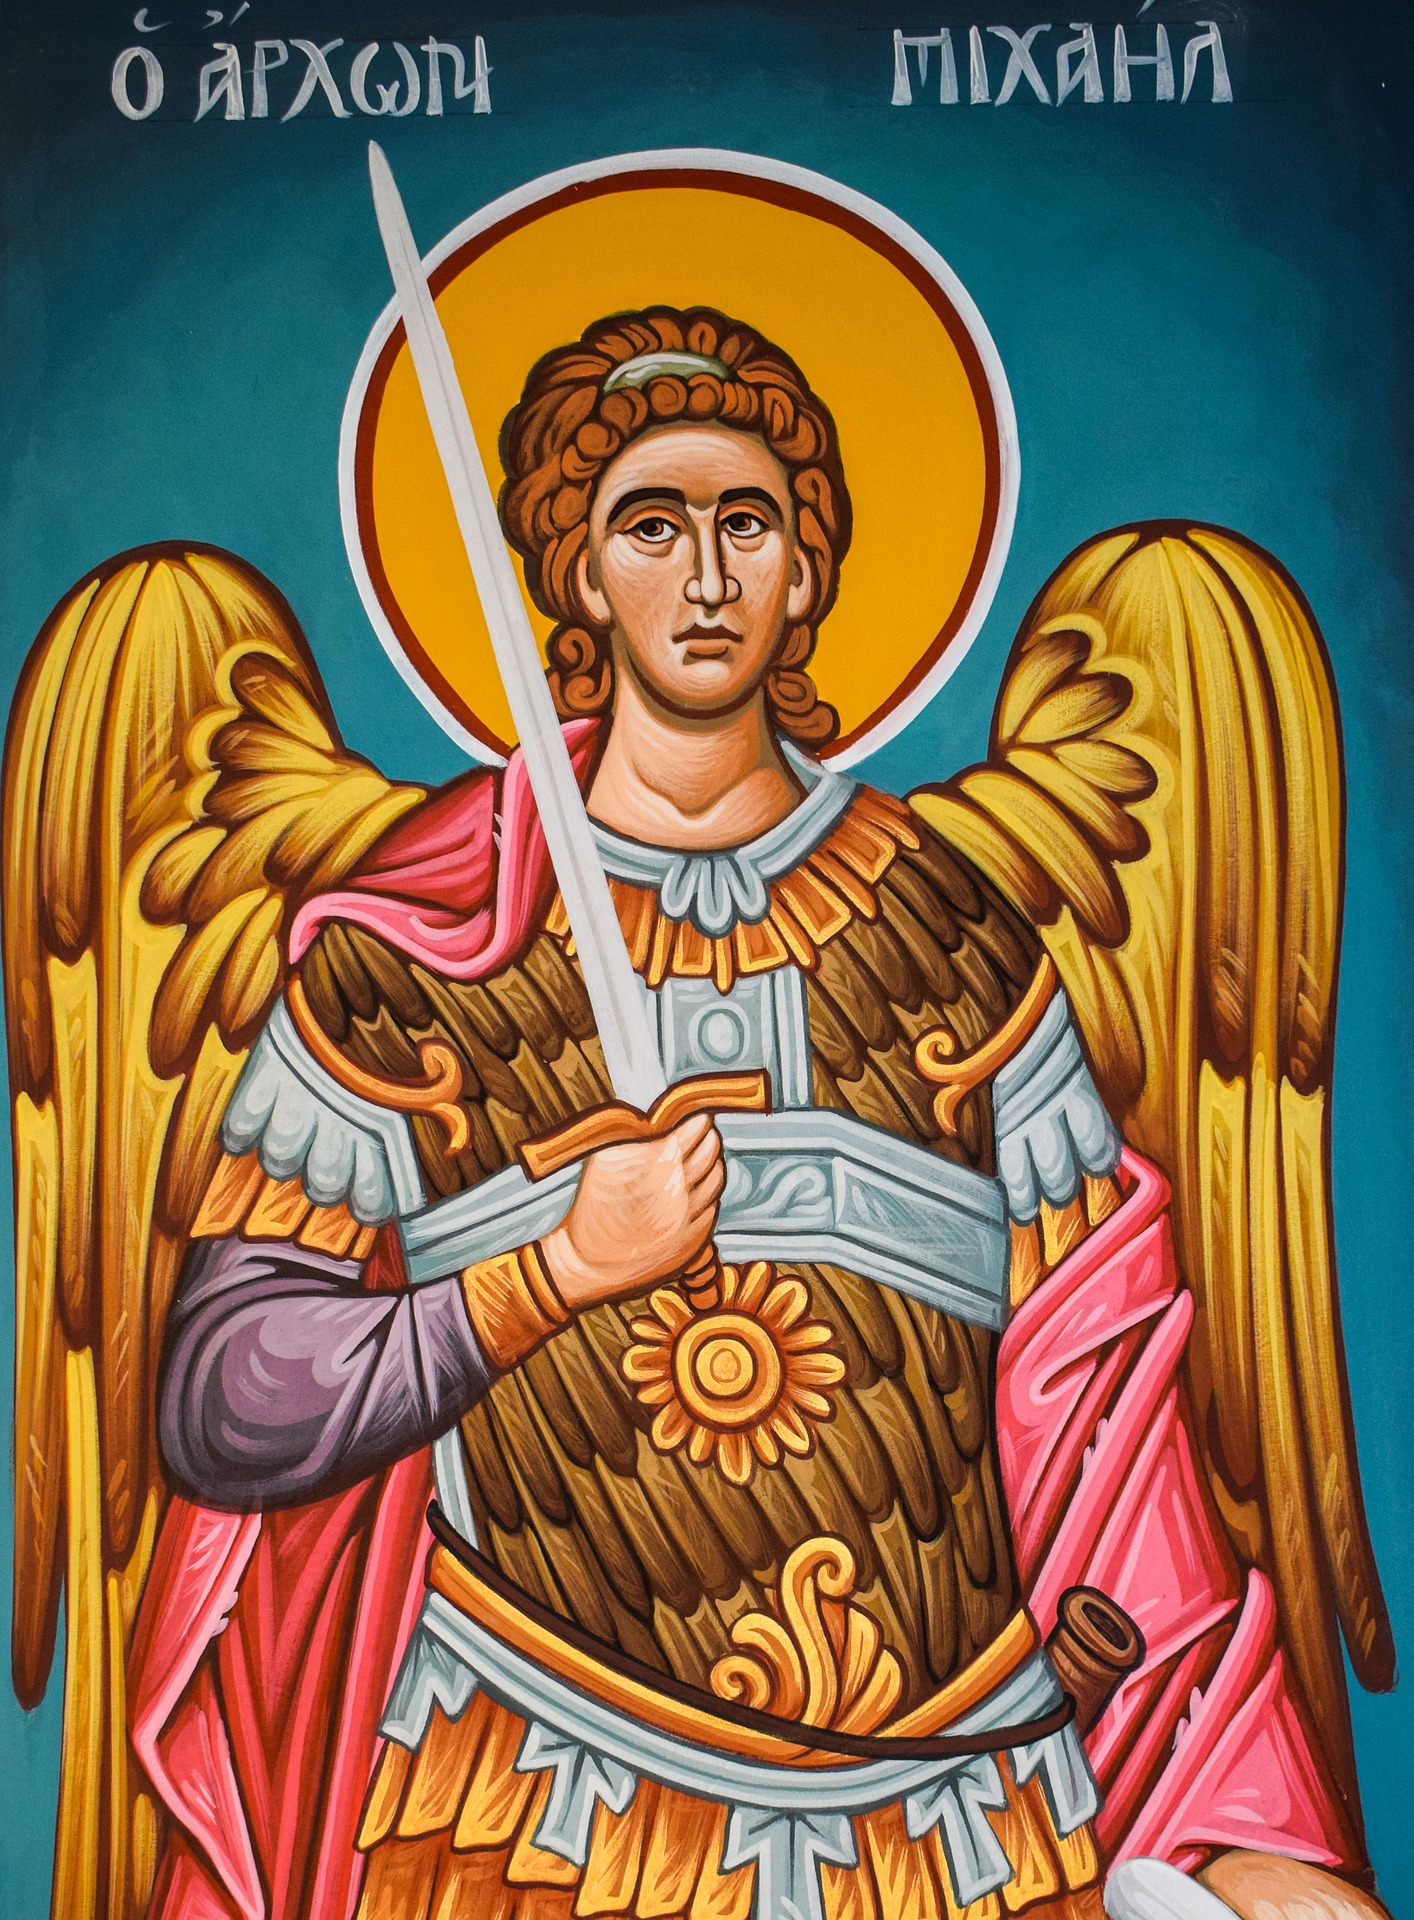 archangel Michael-2086750_1920